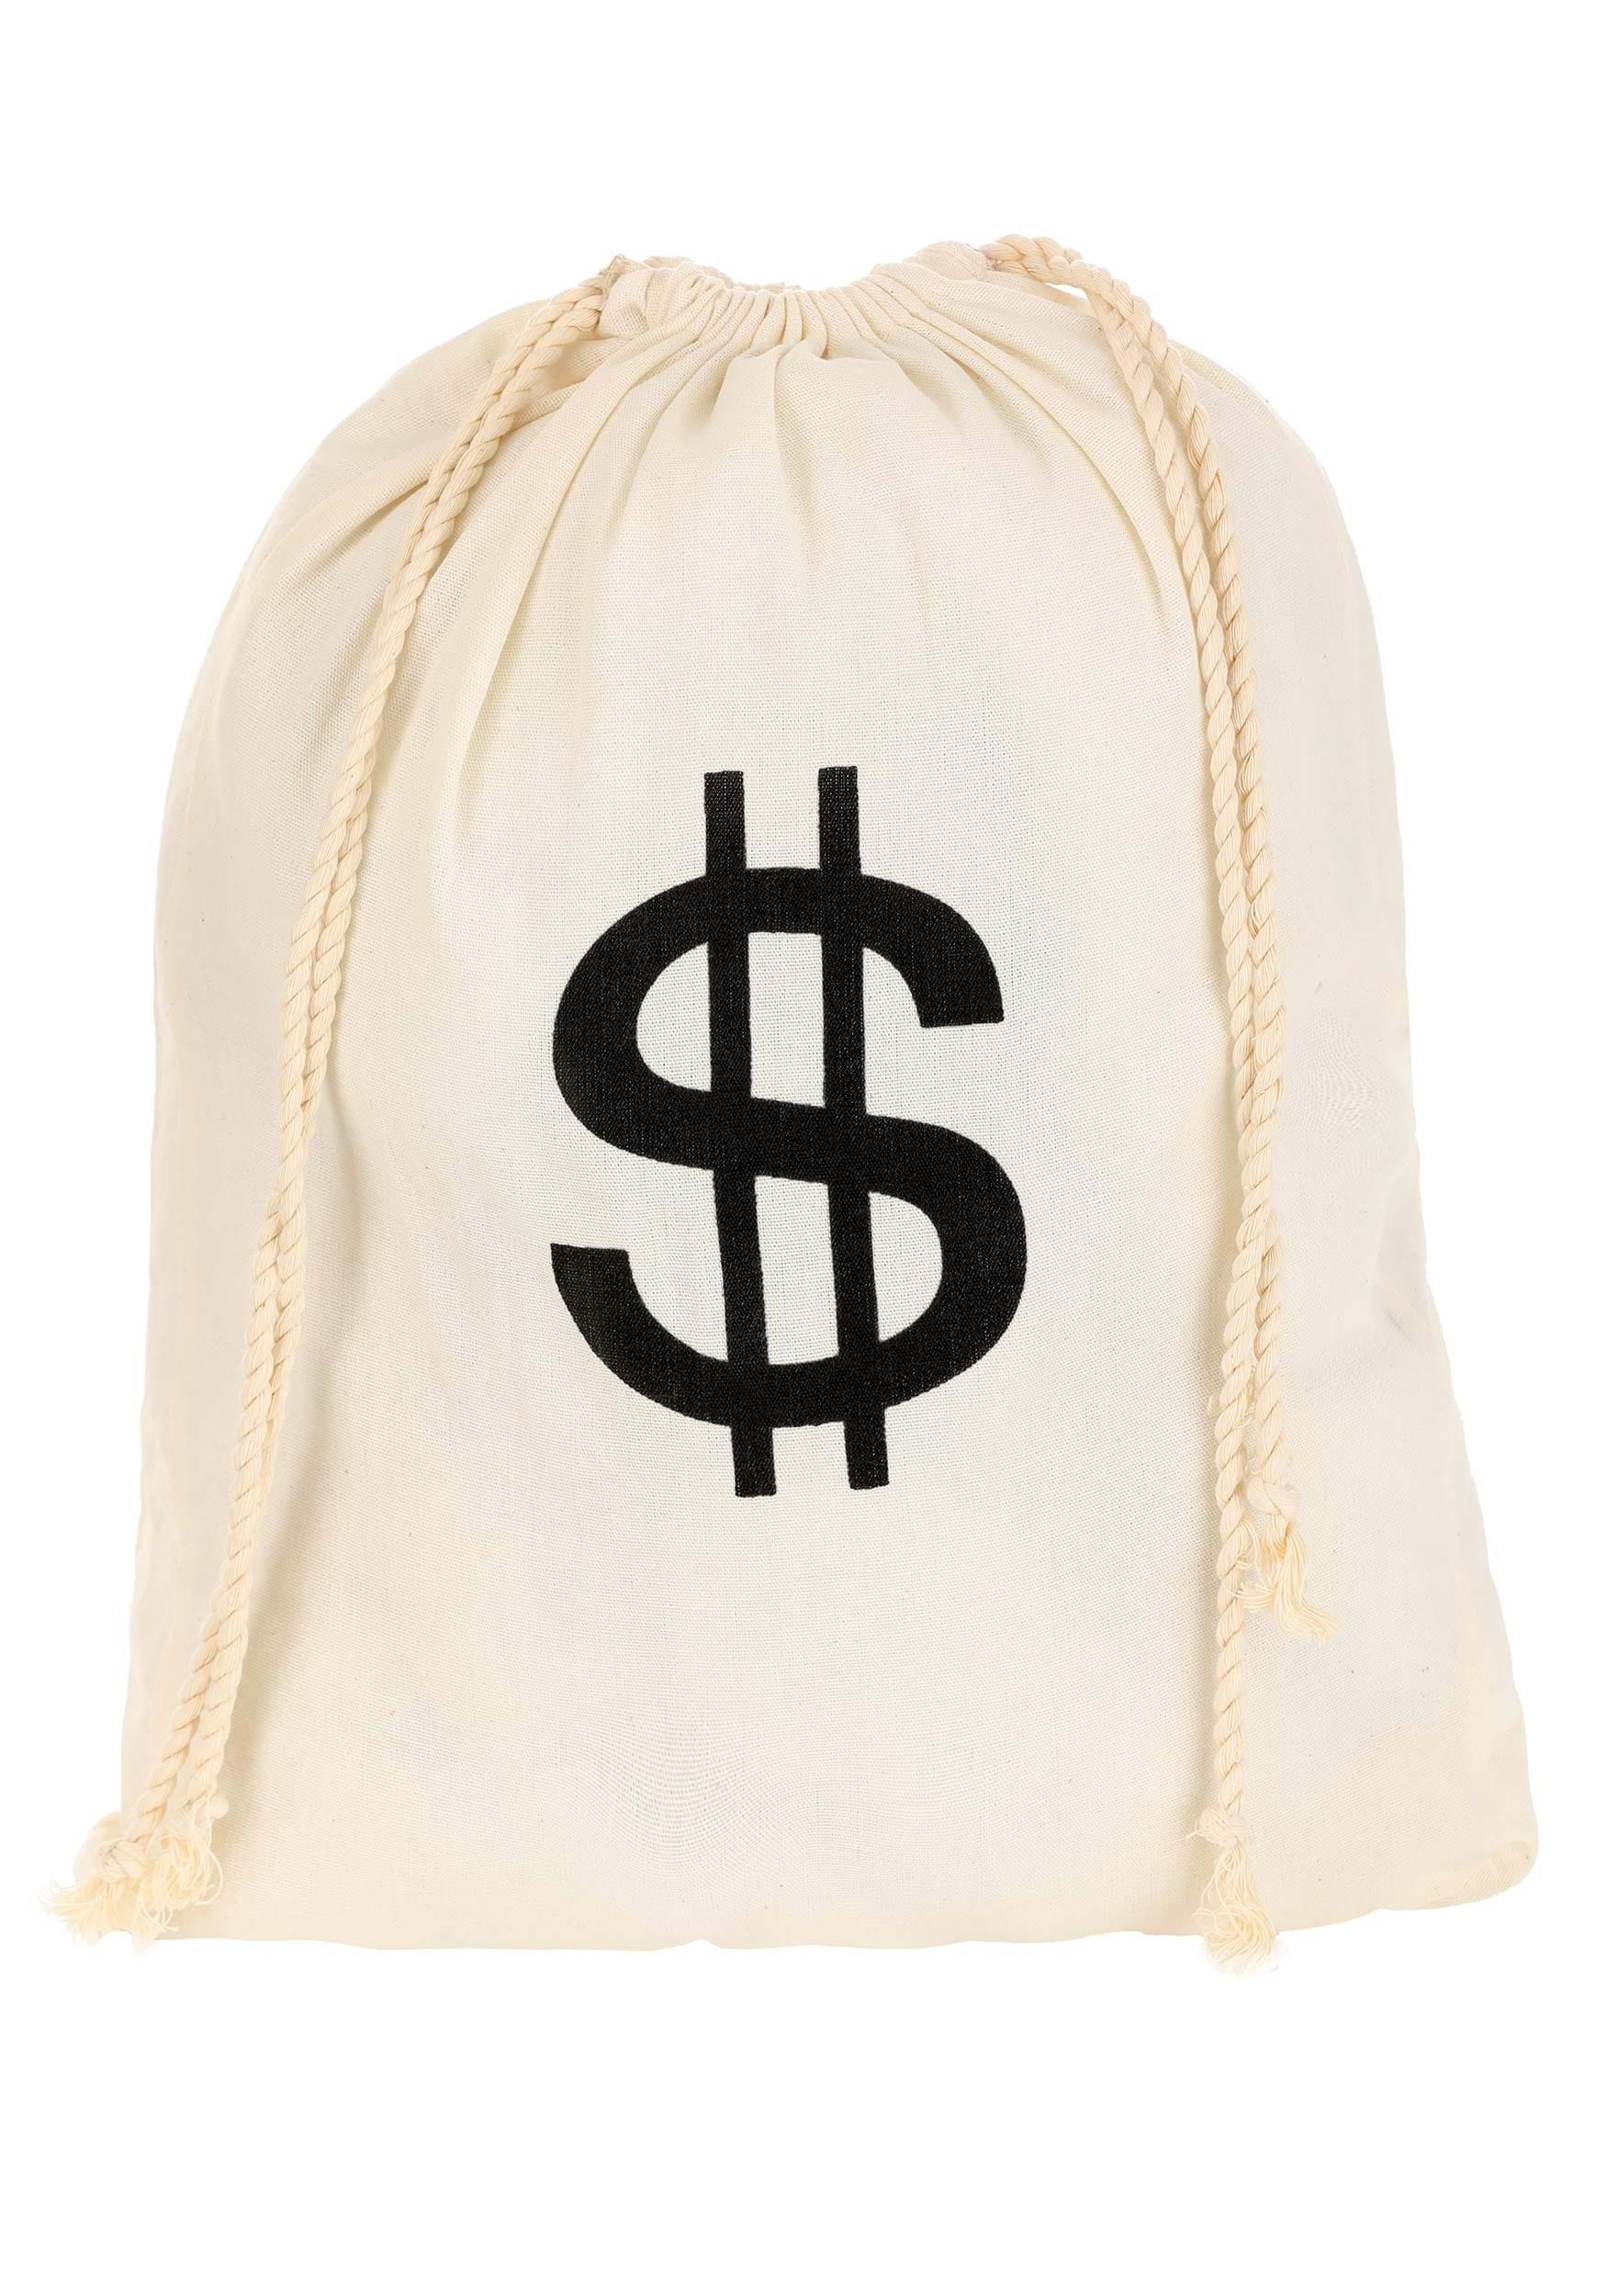 Bank Robber Money Bag Accessory Prop , Fancy Dress Costume Accessories